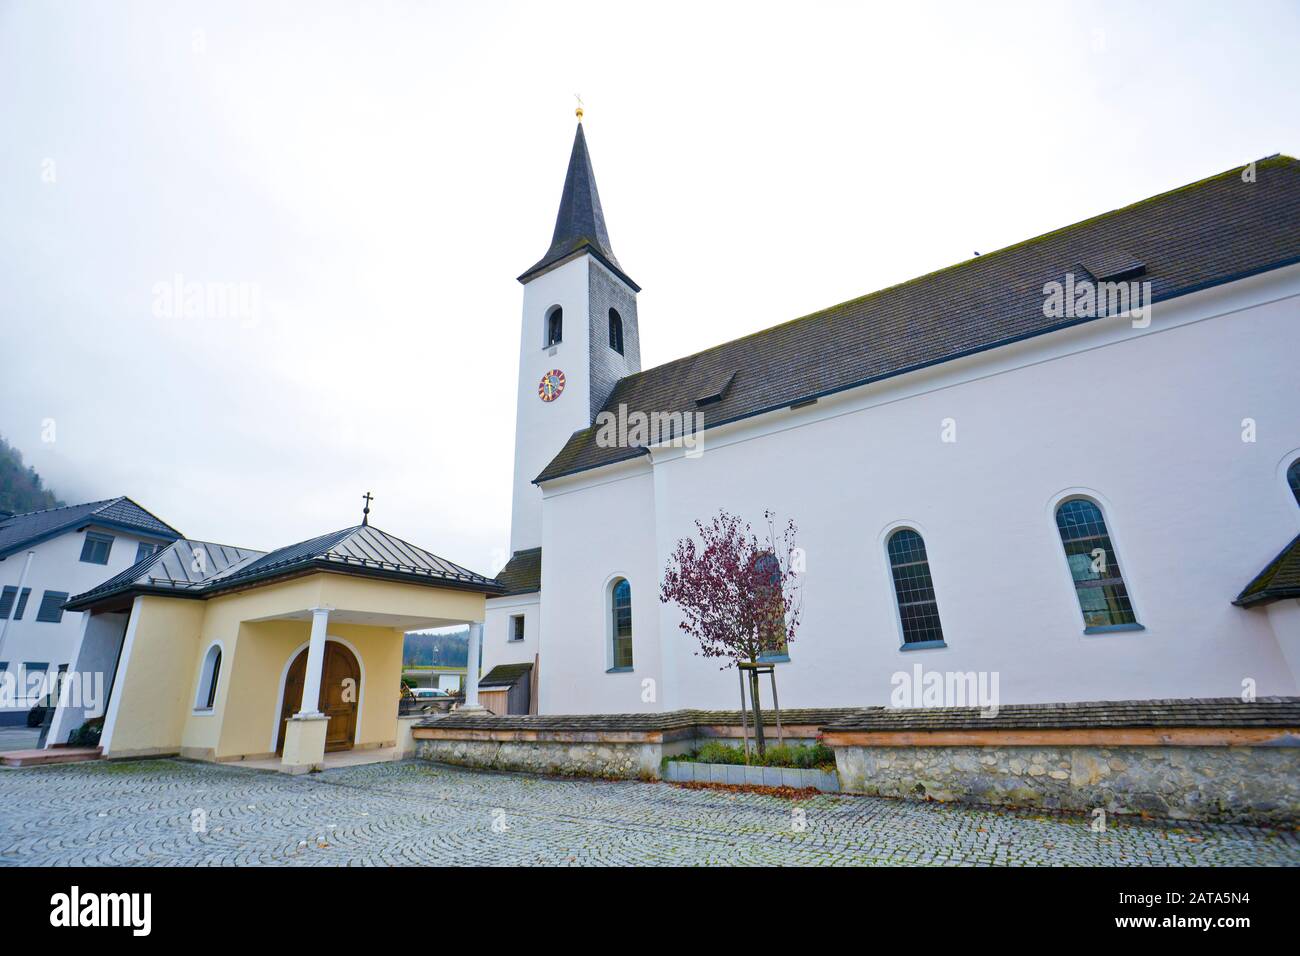 Pfarramt church at Fuschl am See, Austria.  It's romantic small towns in Europe. Stock Photo